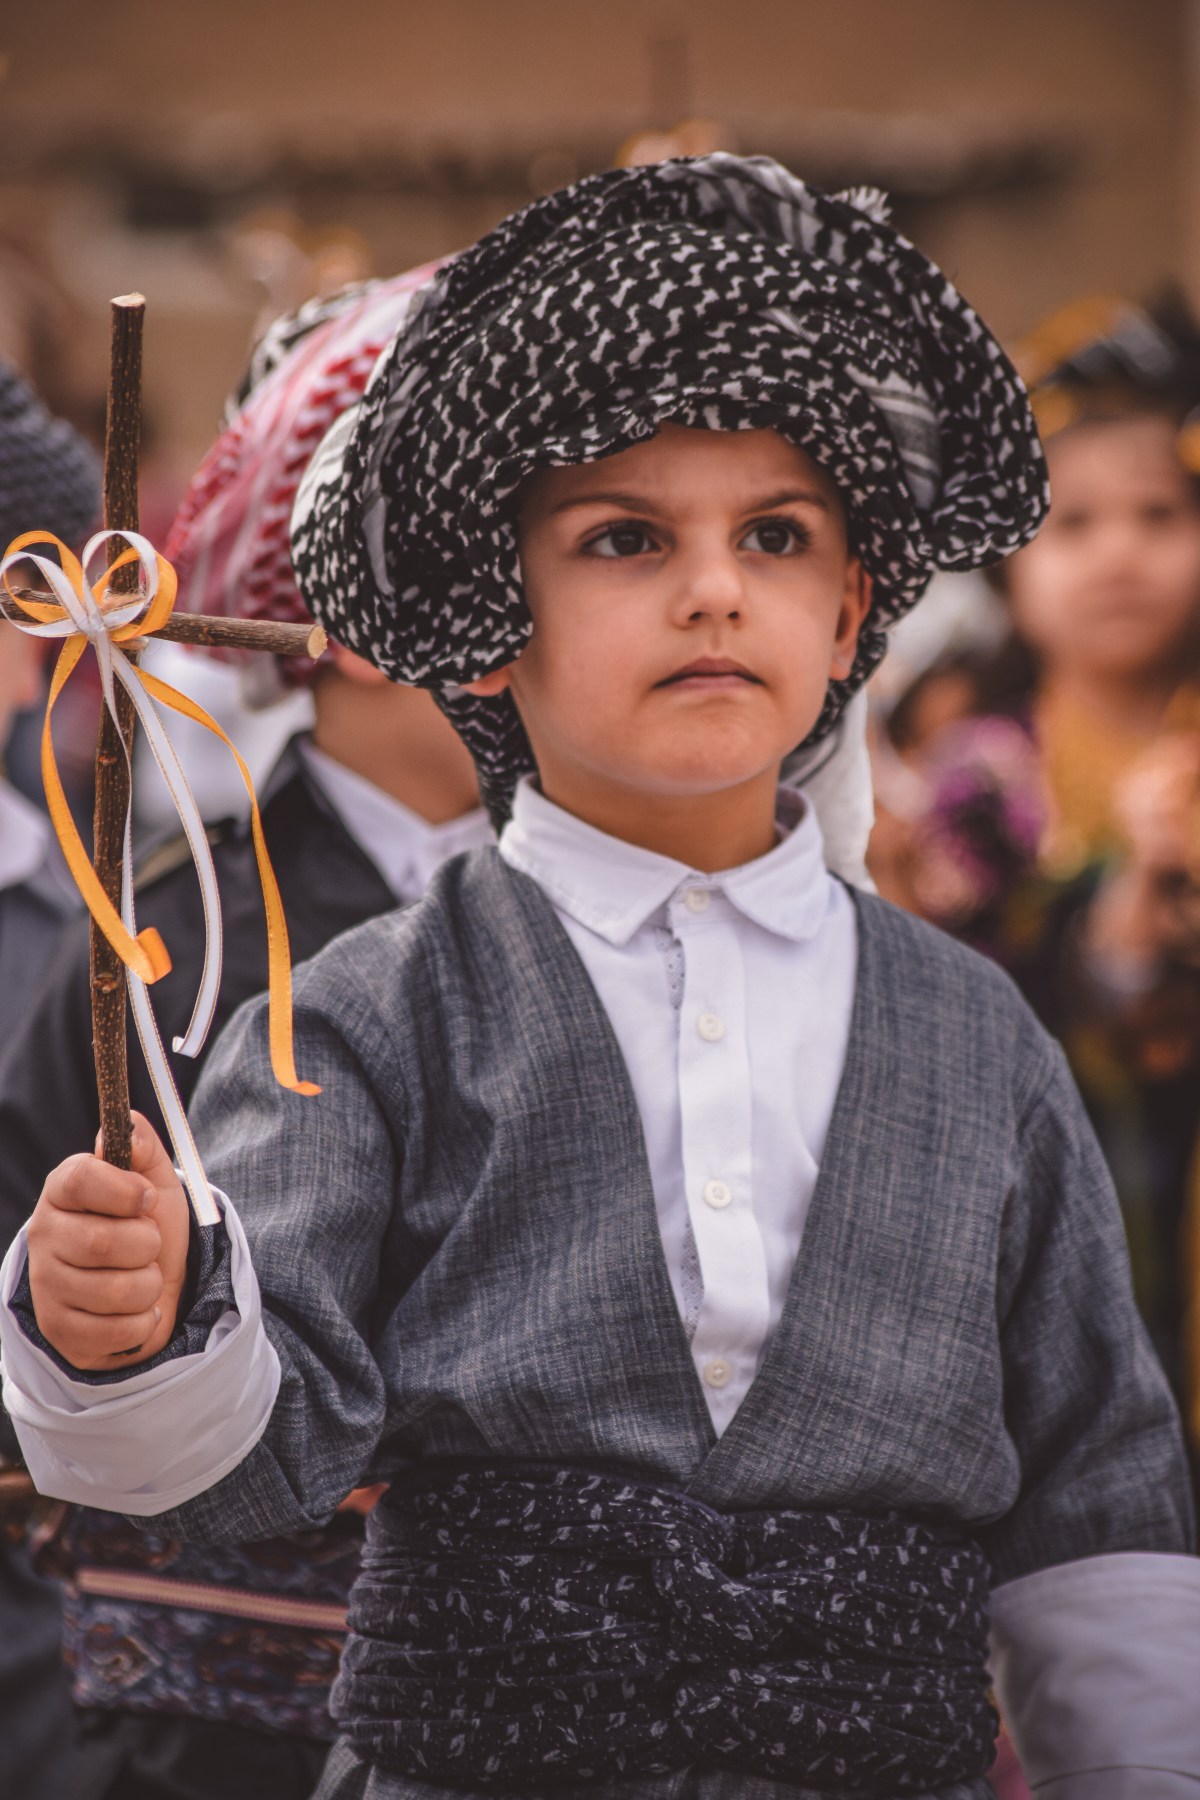 Iraqi children celebrating Palm Sunday